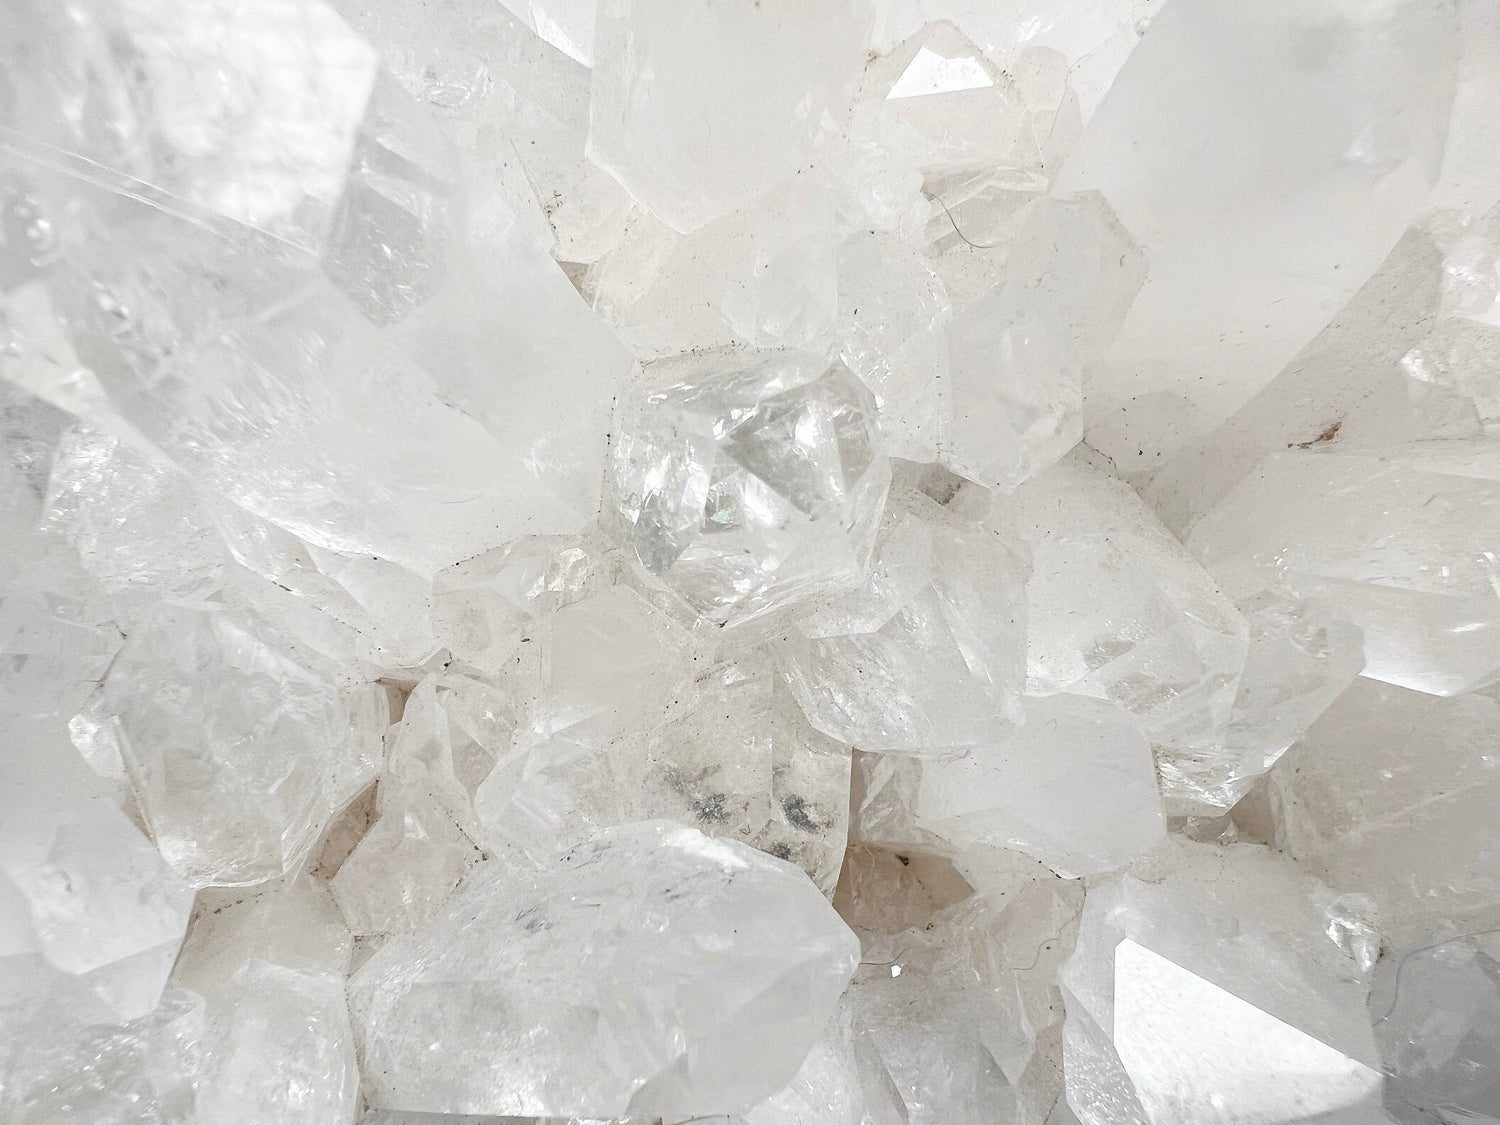 close up of a clear quartz cluster